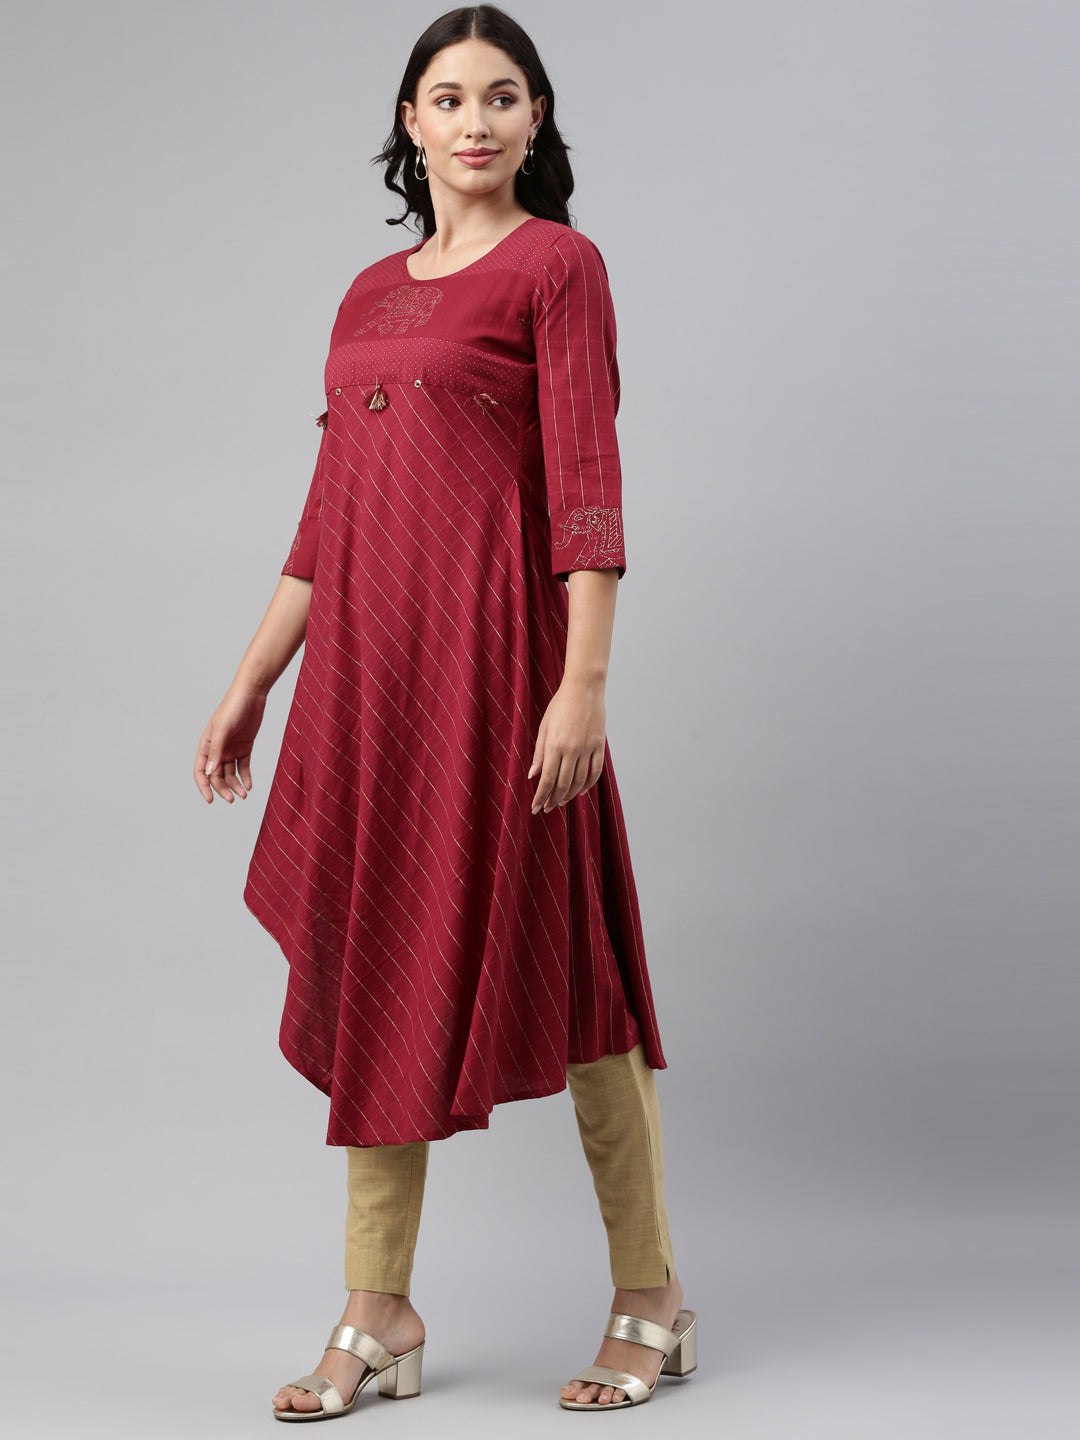 Neeru'S Maroon Color, Rayon Fabric Tunic